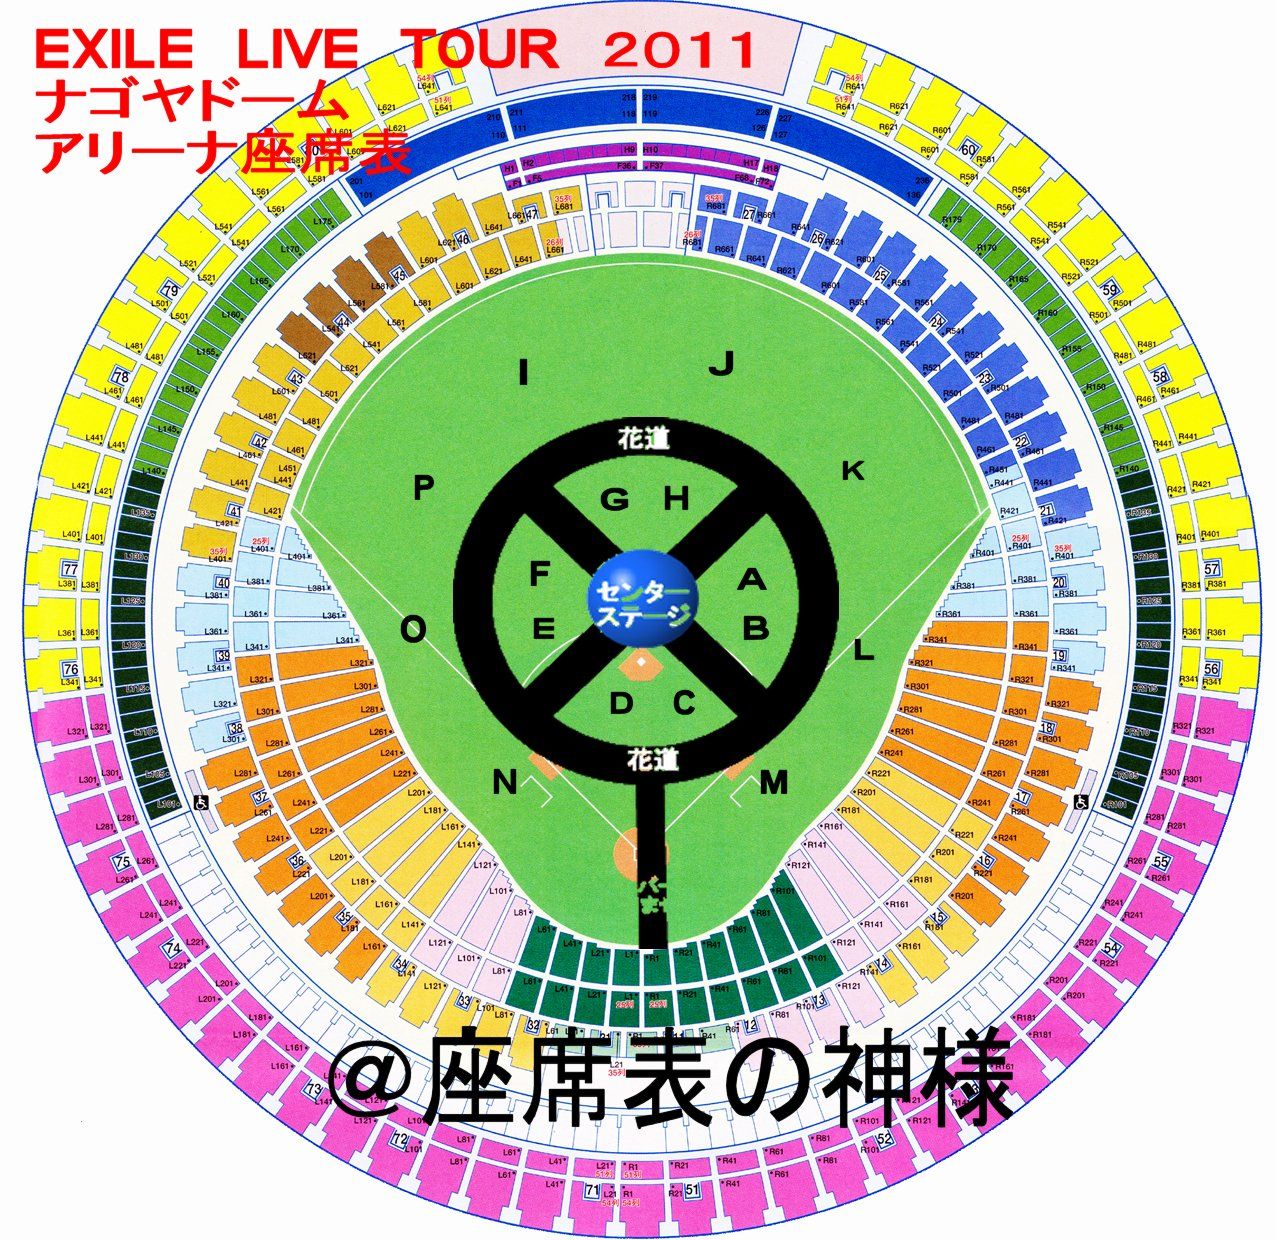 Exile Live Tour 11 Tower Of Wish 願いの塔 ナゴヤドーム アリーナ座席表の神様